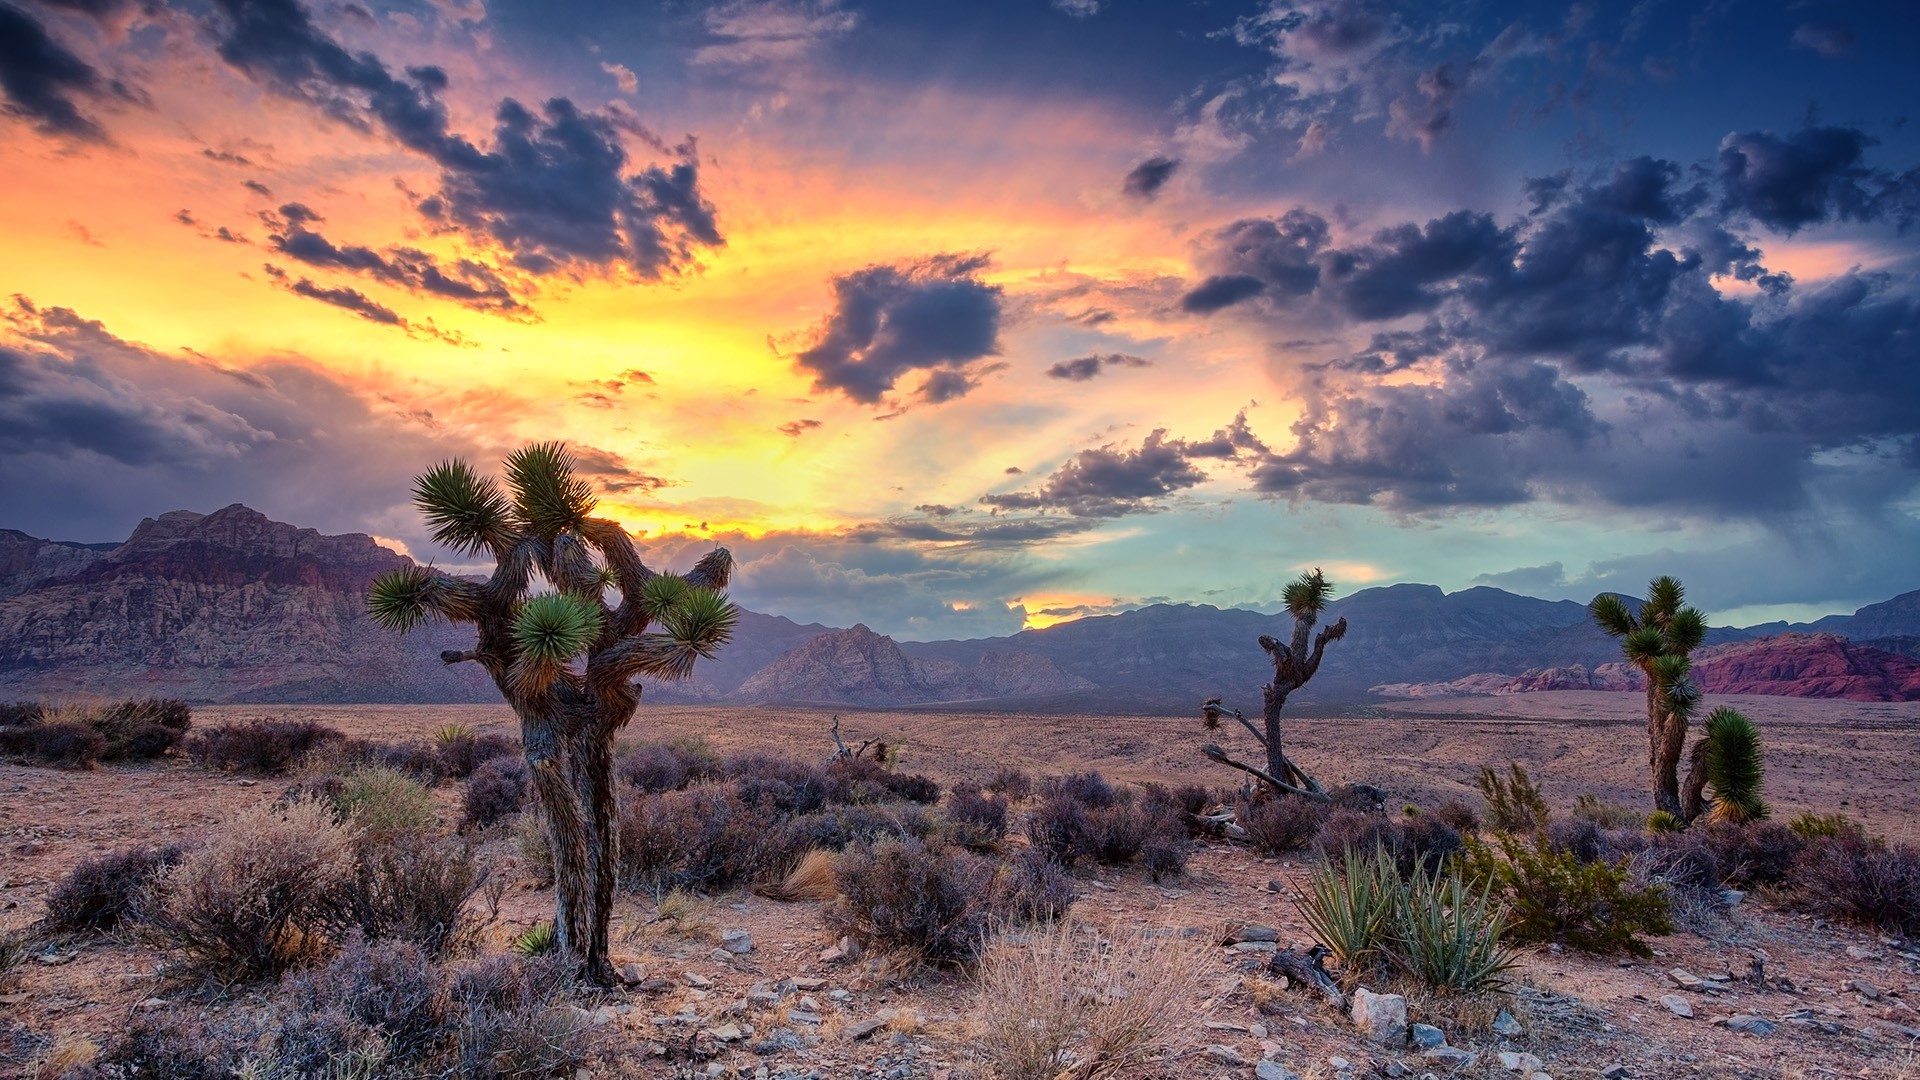 Desert monsoon, Red Rock Canyon, Las Vegas, Nevada, USA. Windows 10 Spotlight Image